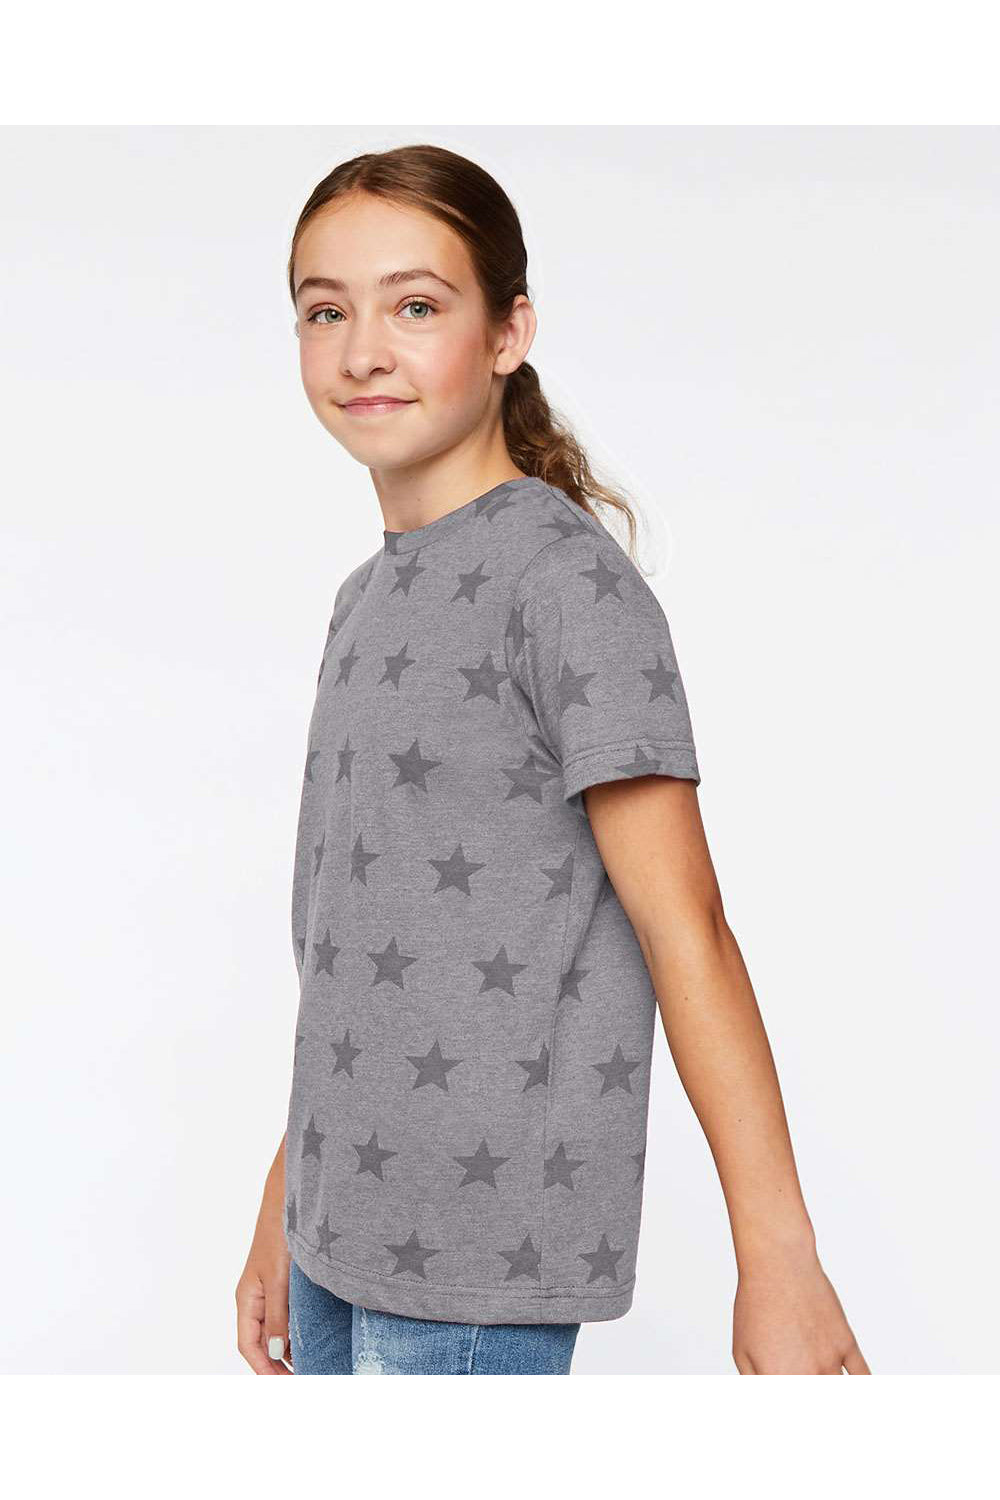 Code Five 2229 Youth Star Print Short Sleeve Crewneck T-Shirt Heather Granite Grey Model Side